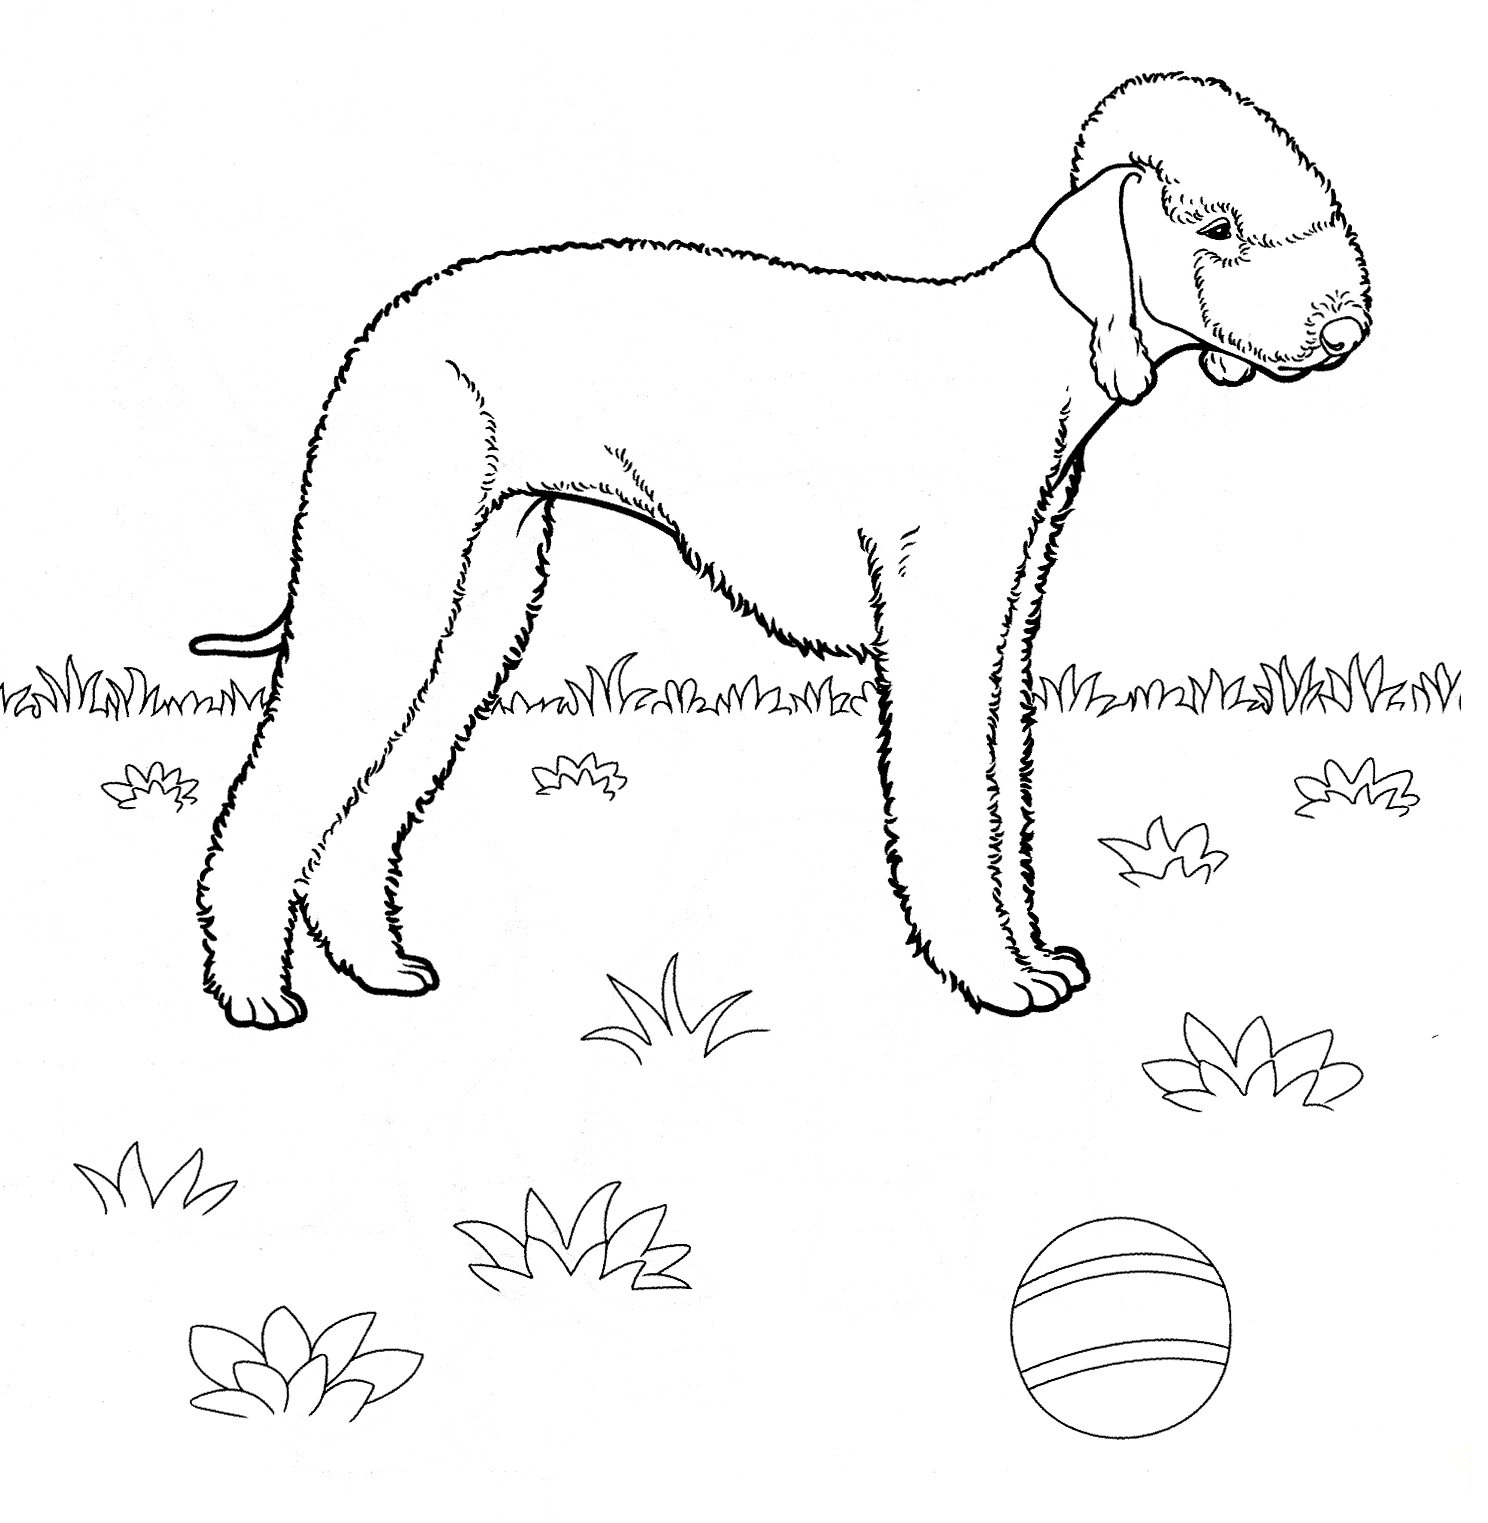 Bedlington Terrier من الكلاب